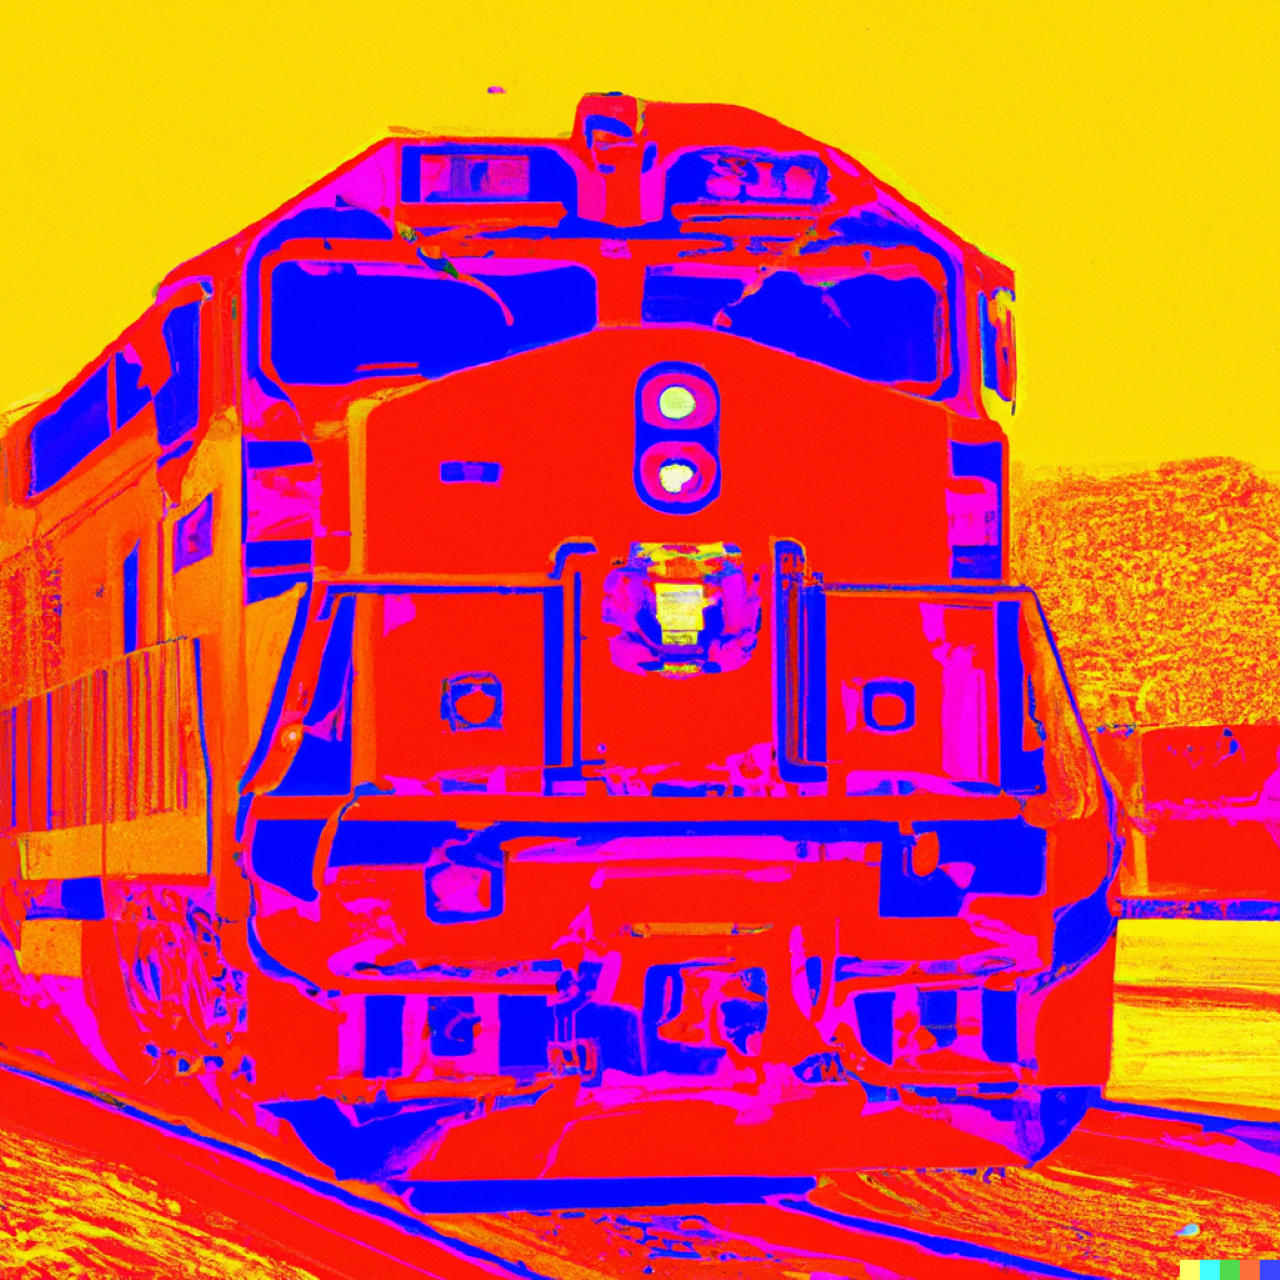 Locomotive in modern style image